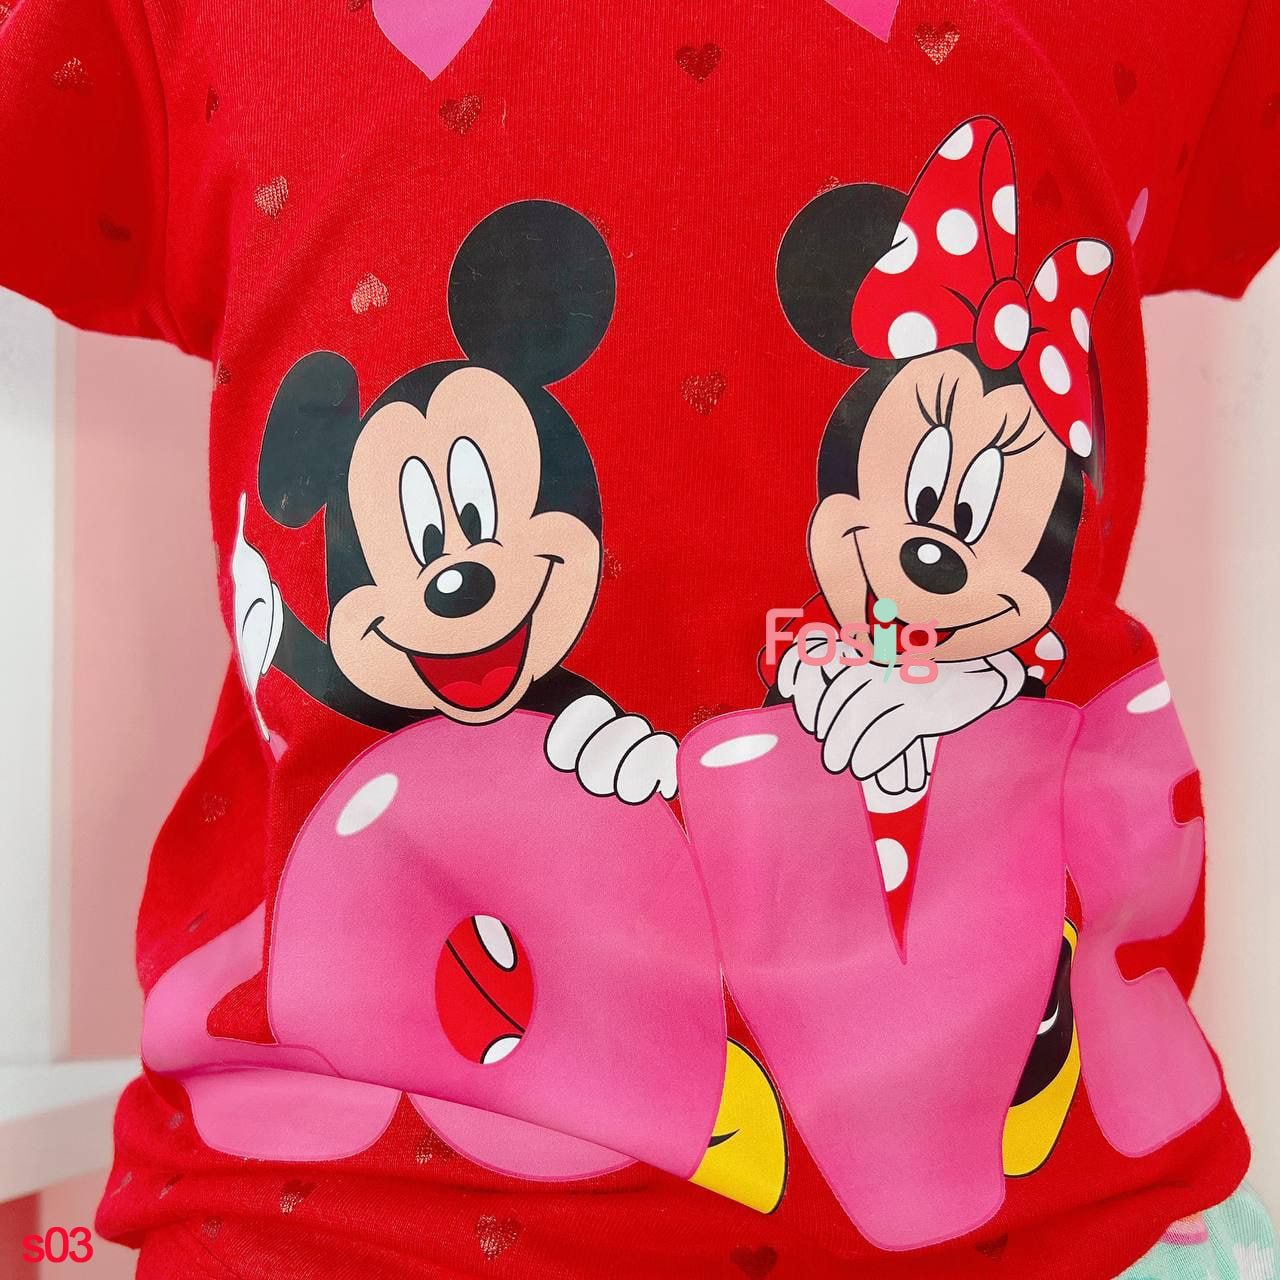  [21-40kg] Set Bộ Áo Chân Váy Bé Gái Disney - Đỏ Mickey 